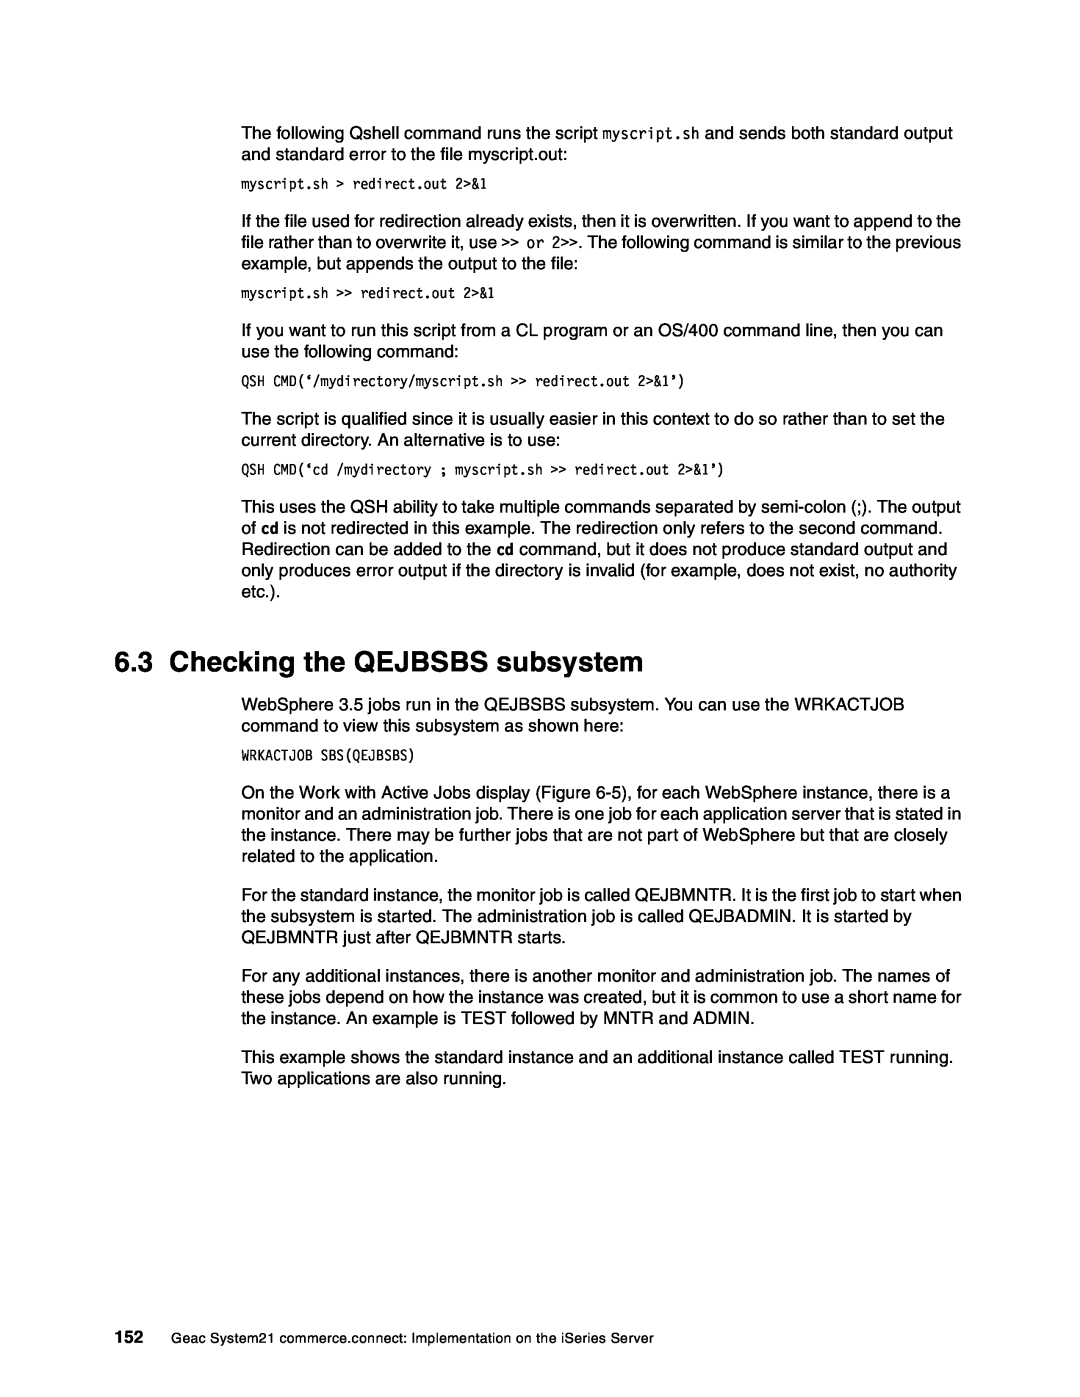 IBM SG24-6526-00 manual Checking the QEJBSBS subsystem 